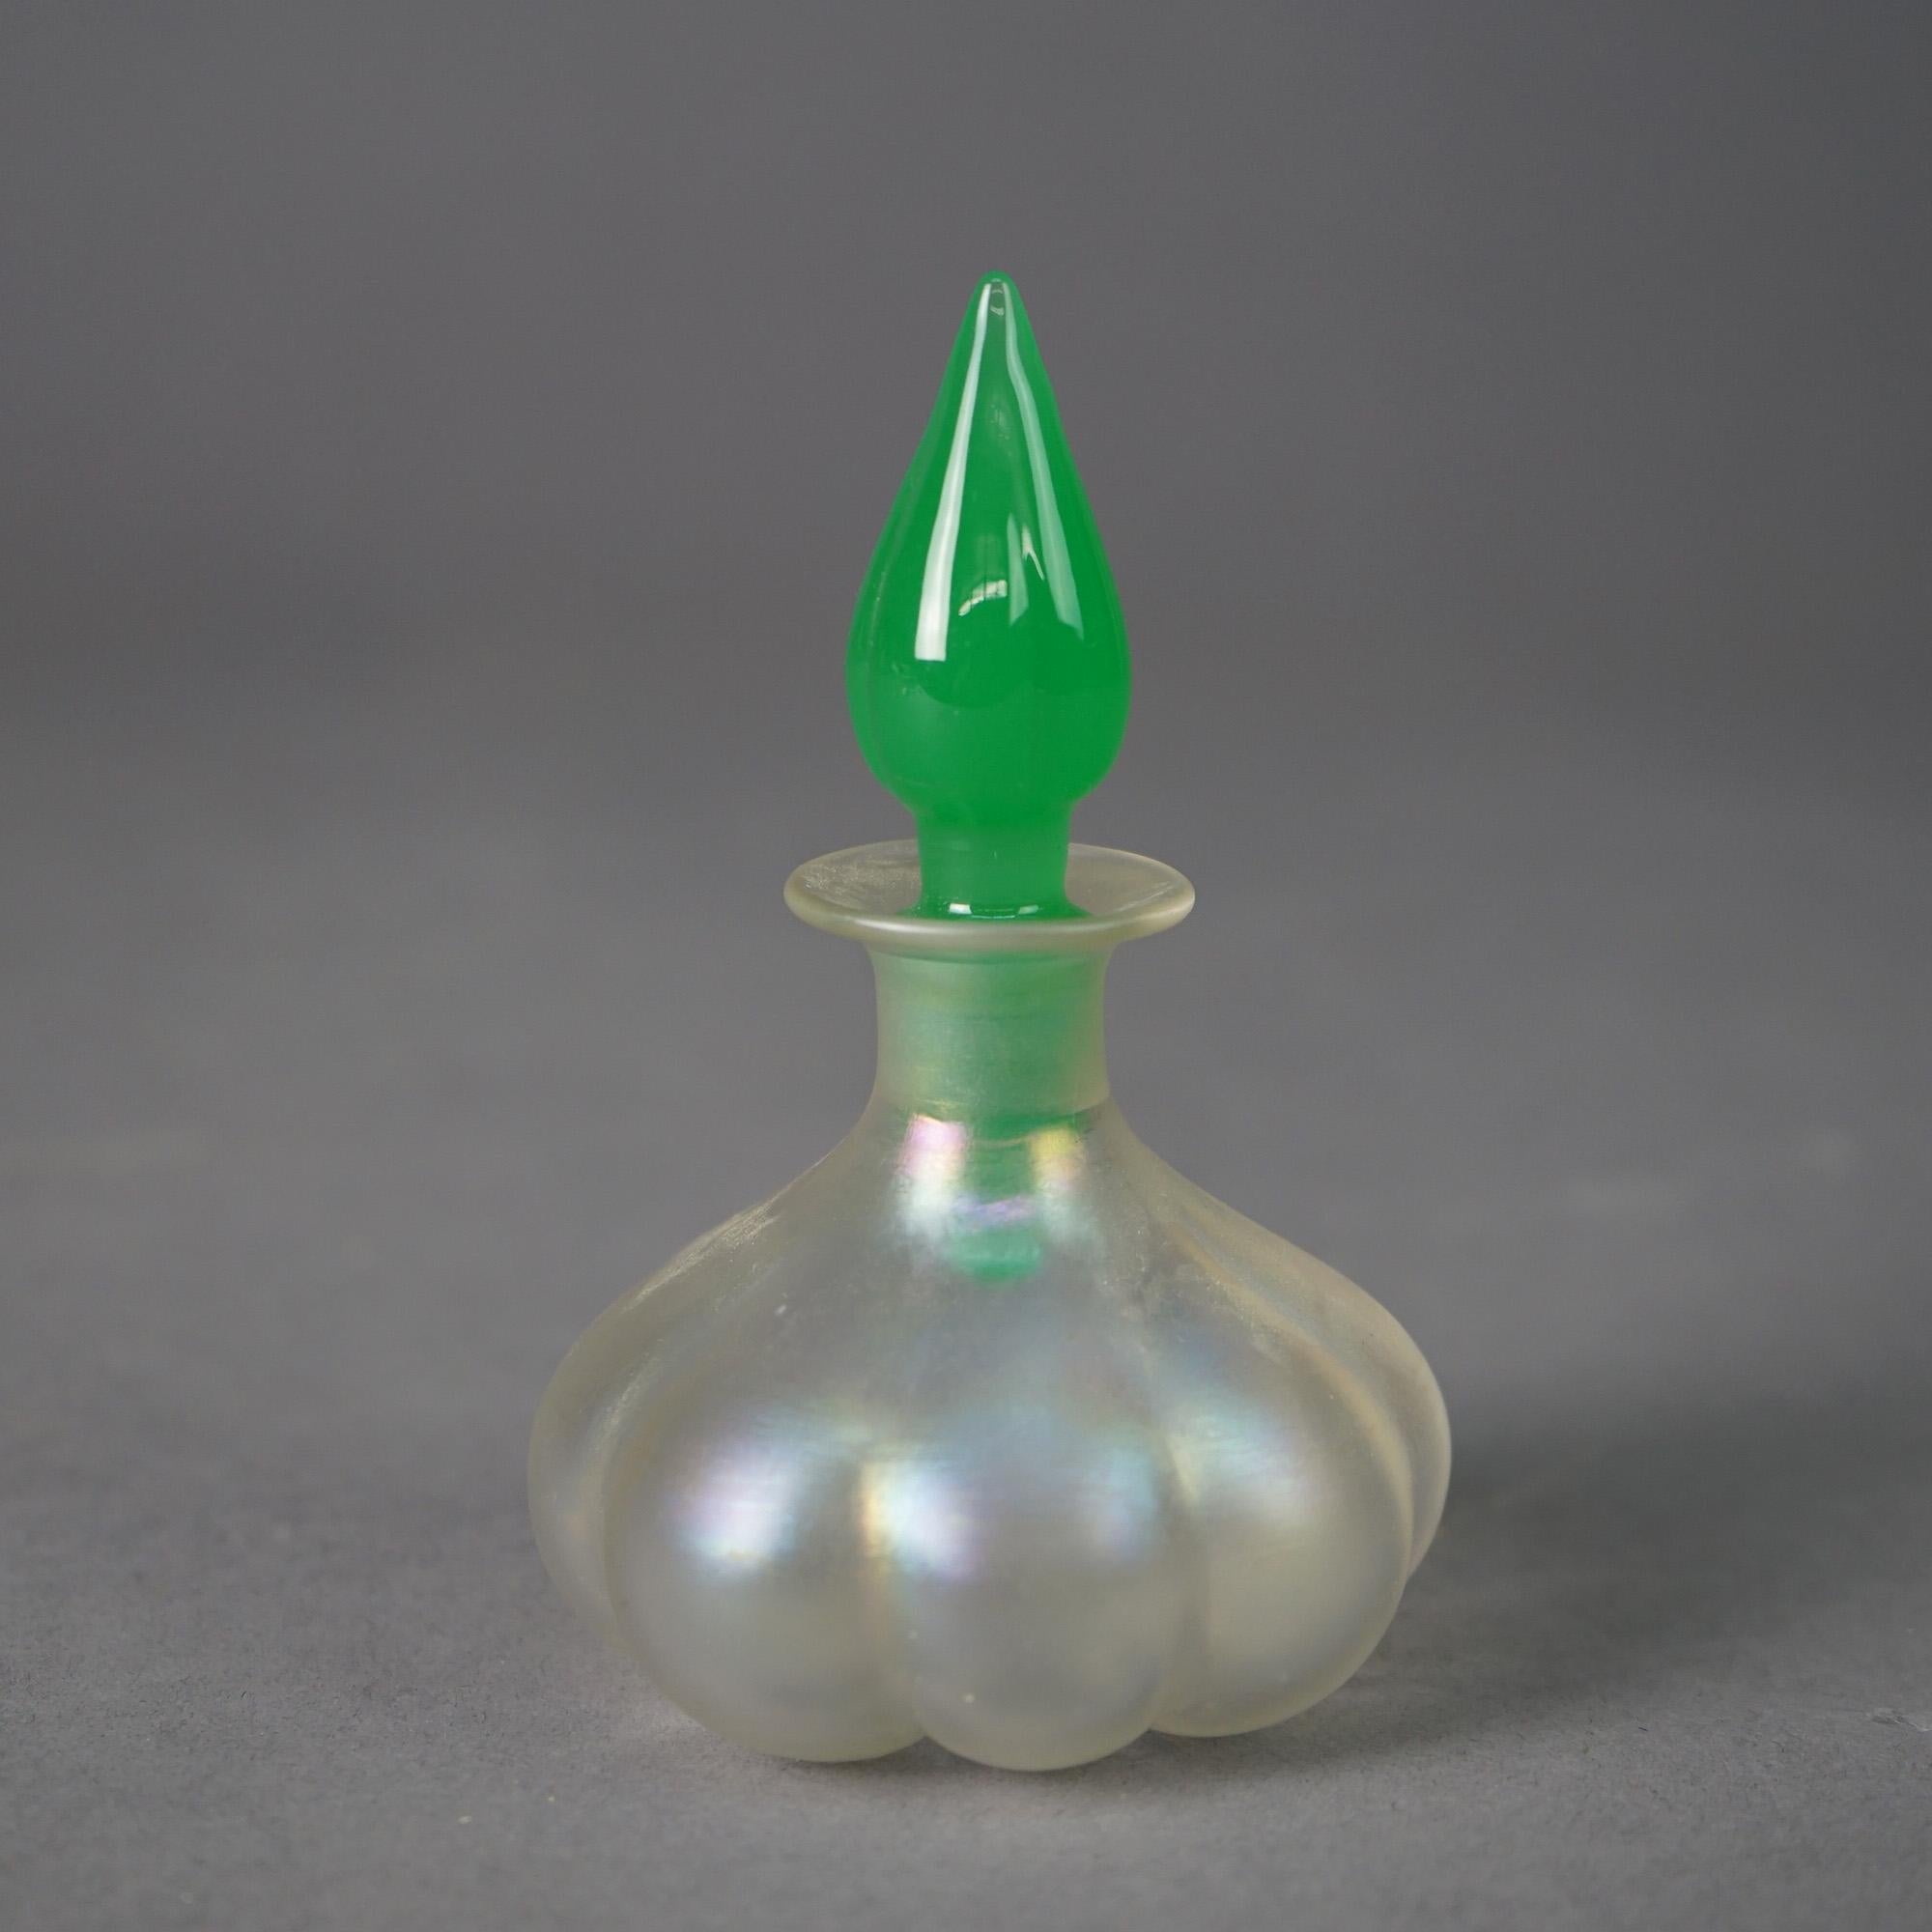 An antique Steuben Verre De Soie perfume bottle offers mellon form with jade jade stopper in stylized flame form, c1930

Measures - 4.5